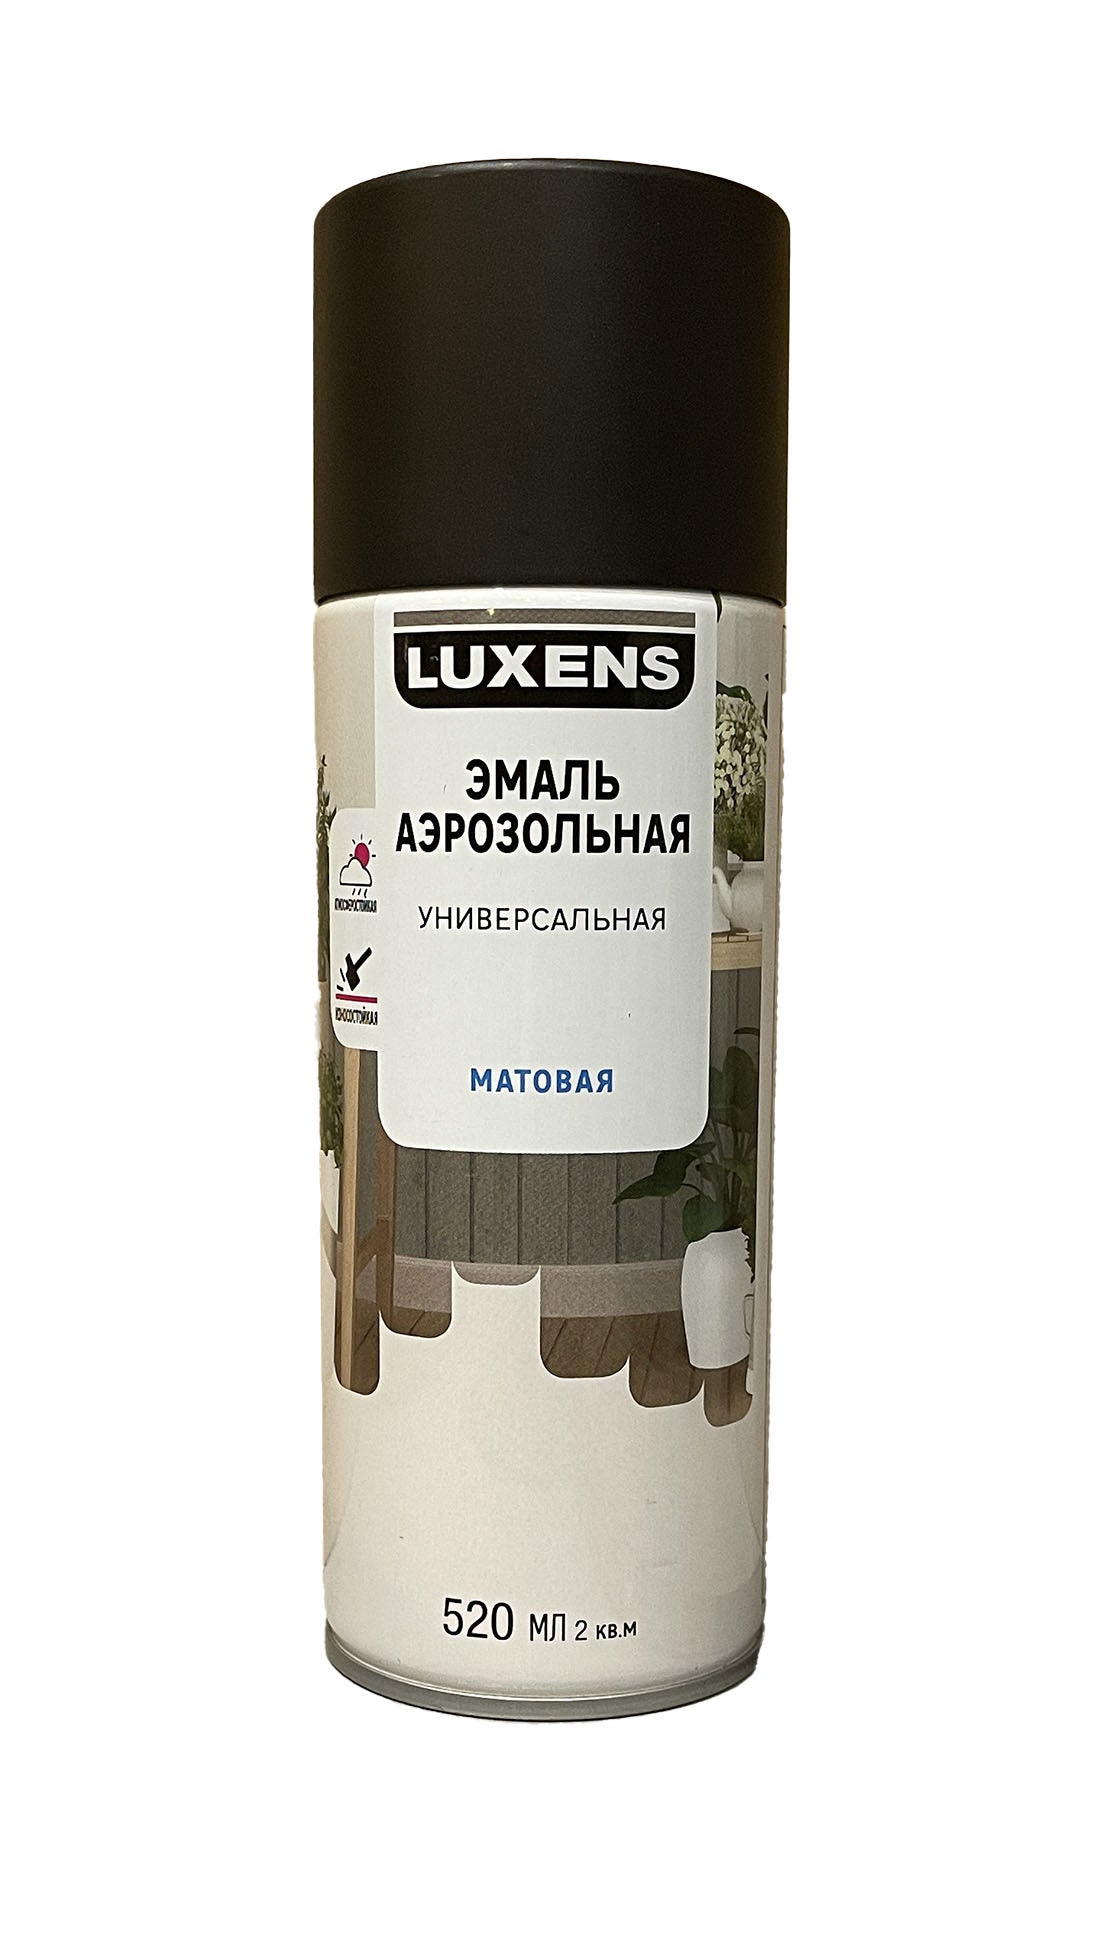 LUX-83237427-M-520 - эмаль аэрозольная универсальная матовая Luxens, цвет: черный, баллон: 520 мл.